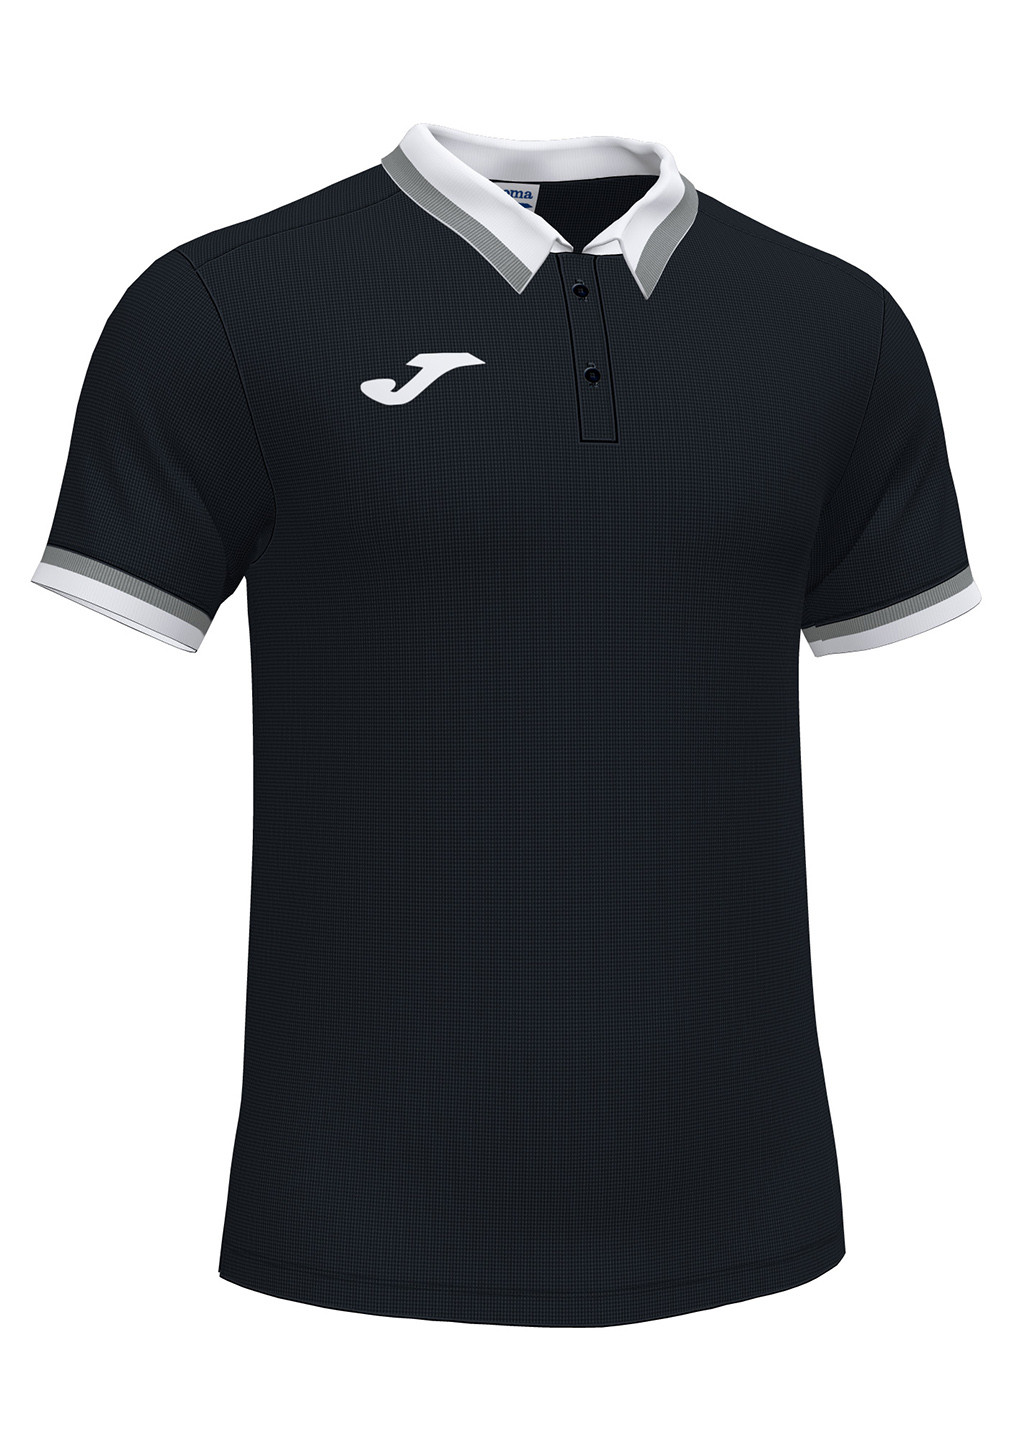 Черная футболка-поло для мужчин Joma с логотипом